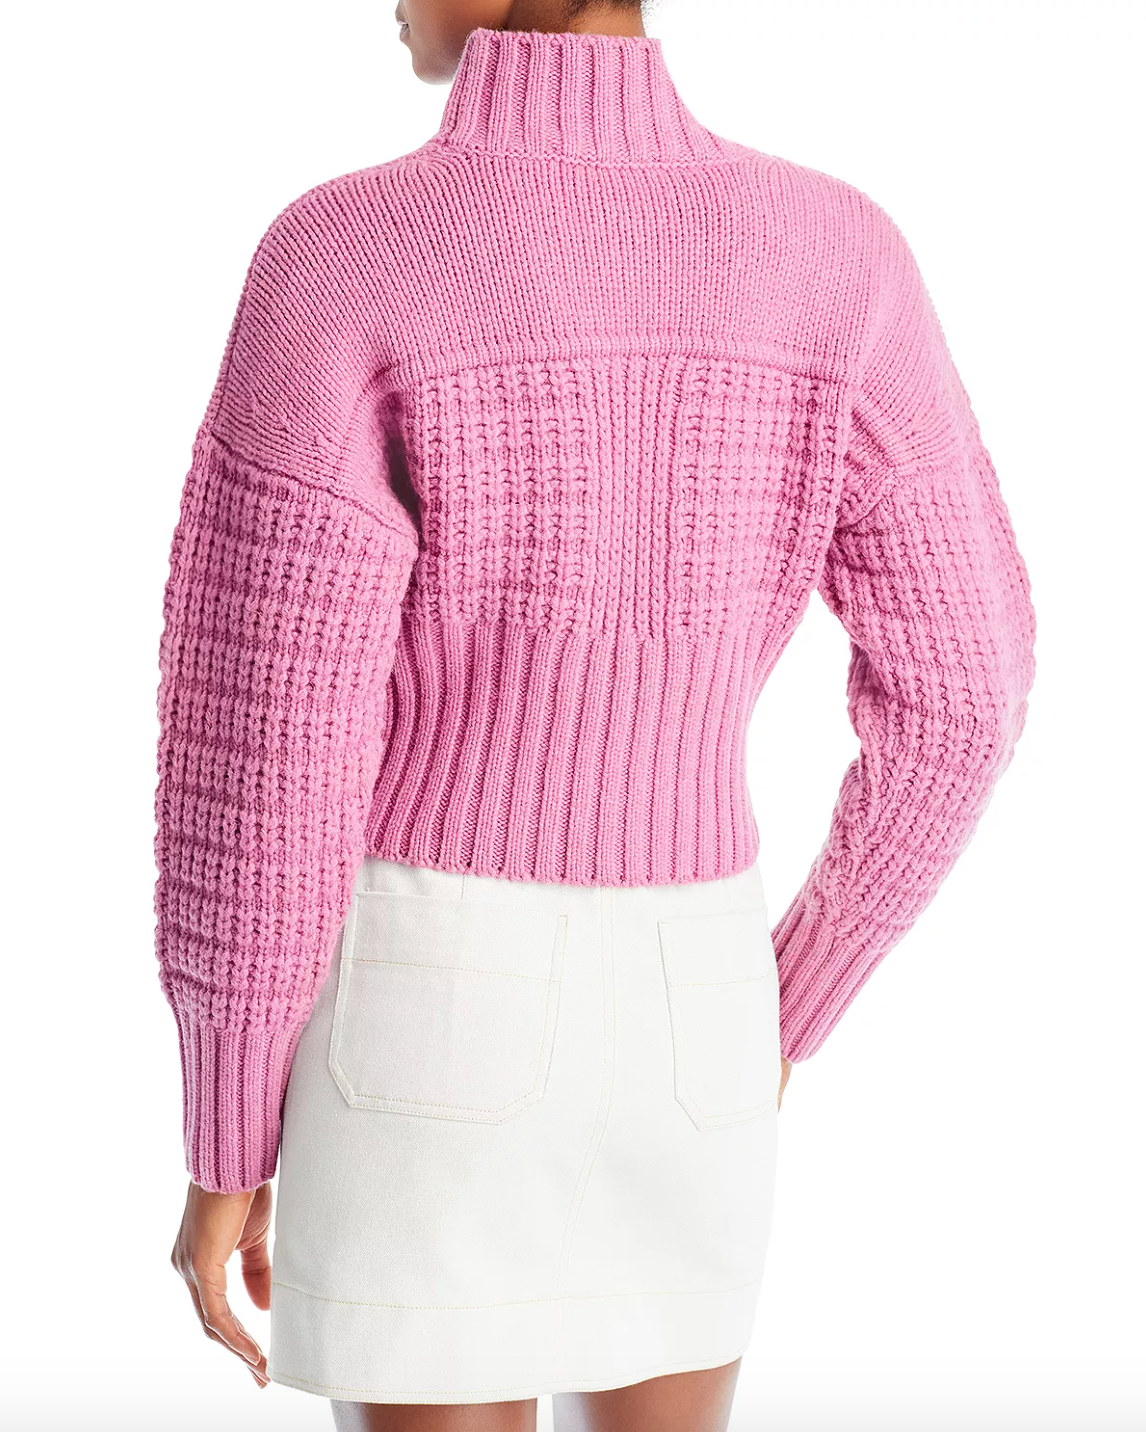 IRO Paris | Lexa Sweater - Dusty Pink